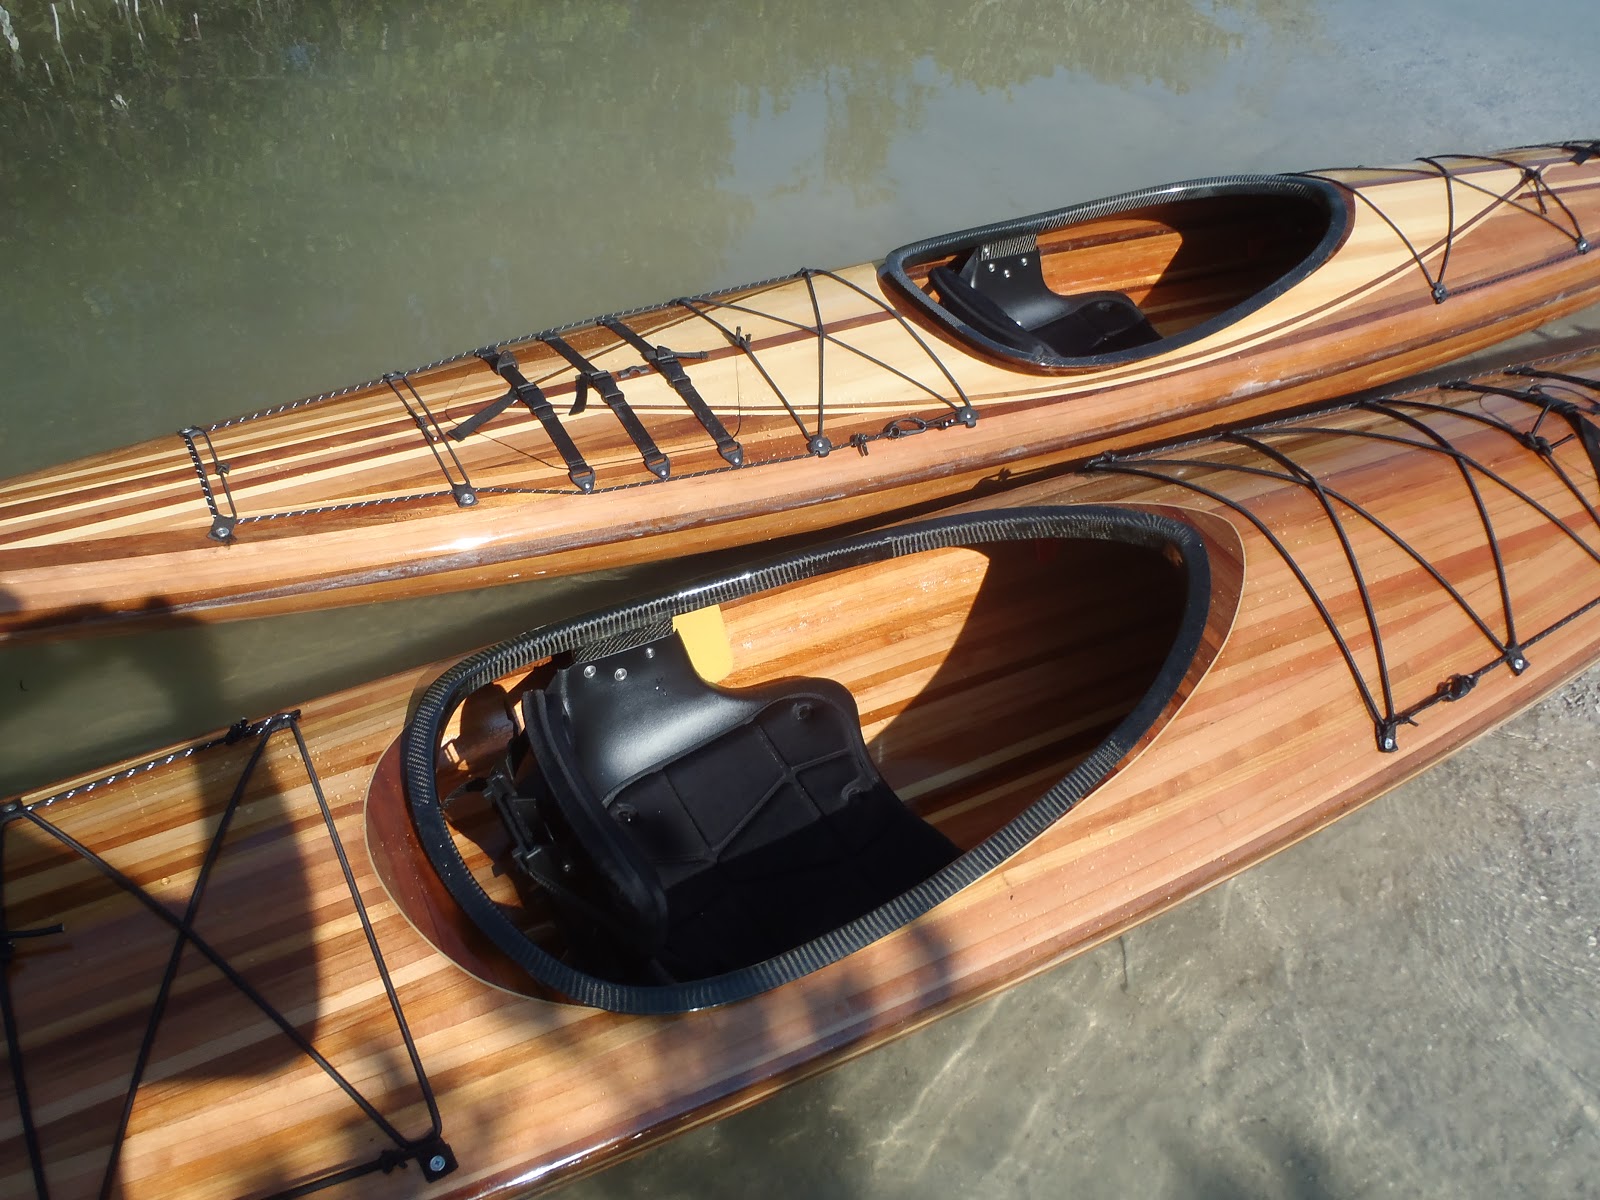 Guillemot "Simple Design" Kayak Build: Estero Bay Test Paddle